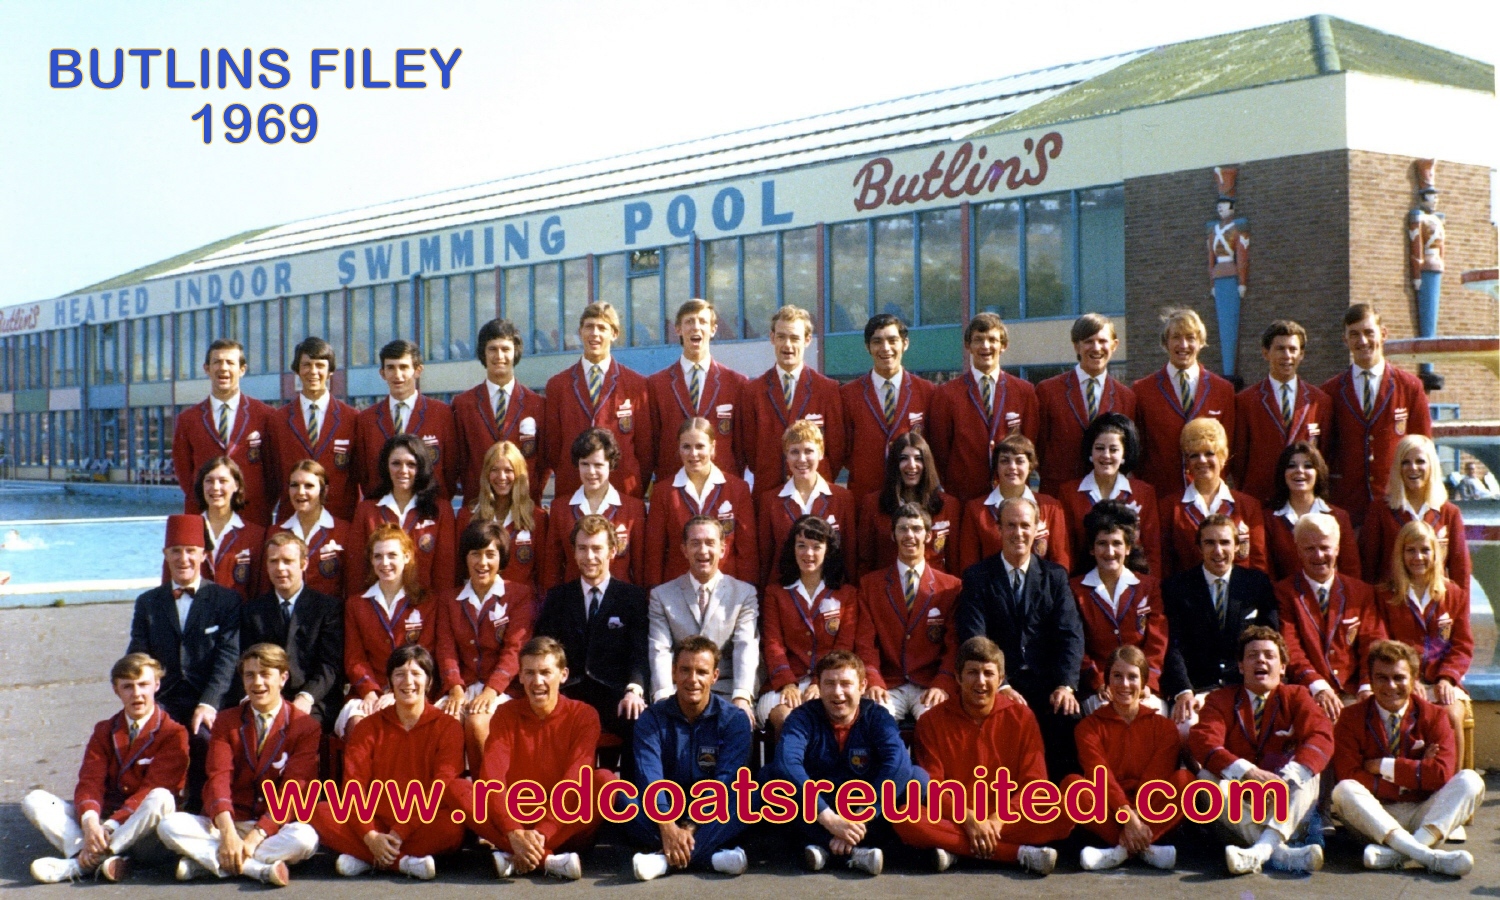 Butlins Filey 1969 at Redcoats Reunited